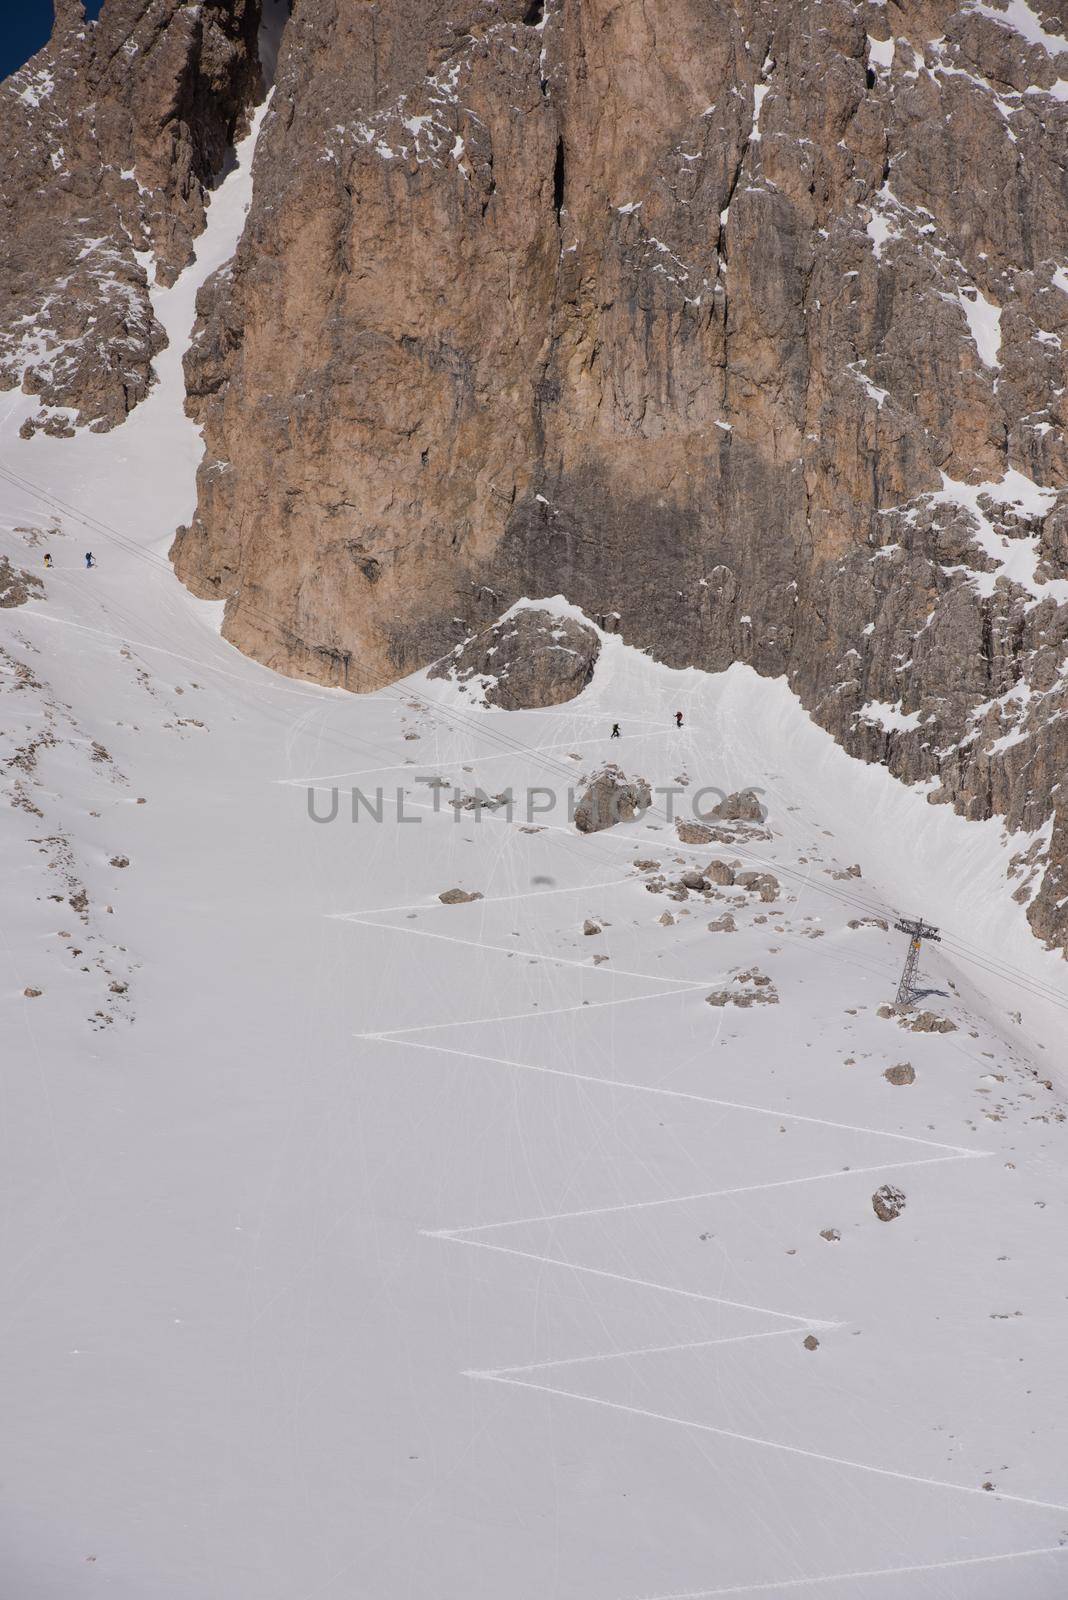 touring ski tracks in snow by dotshock